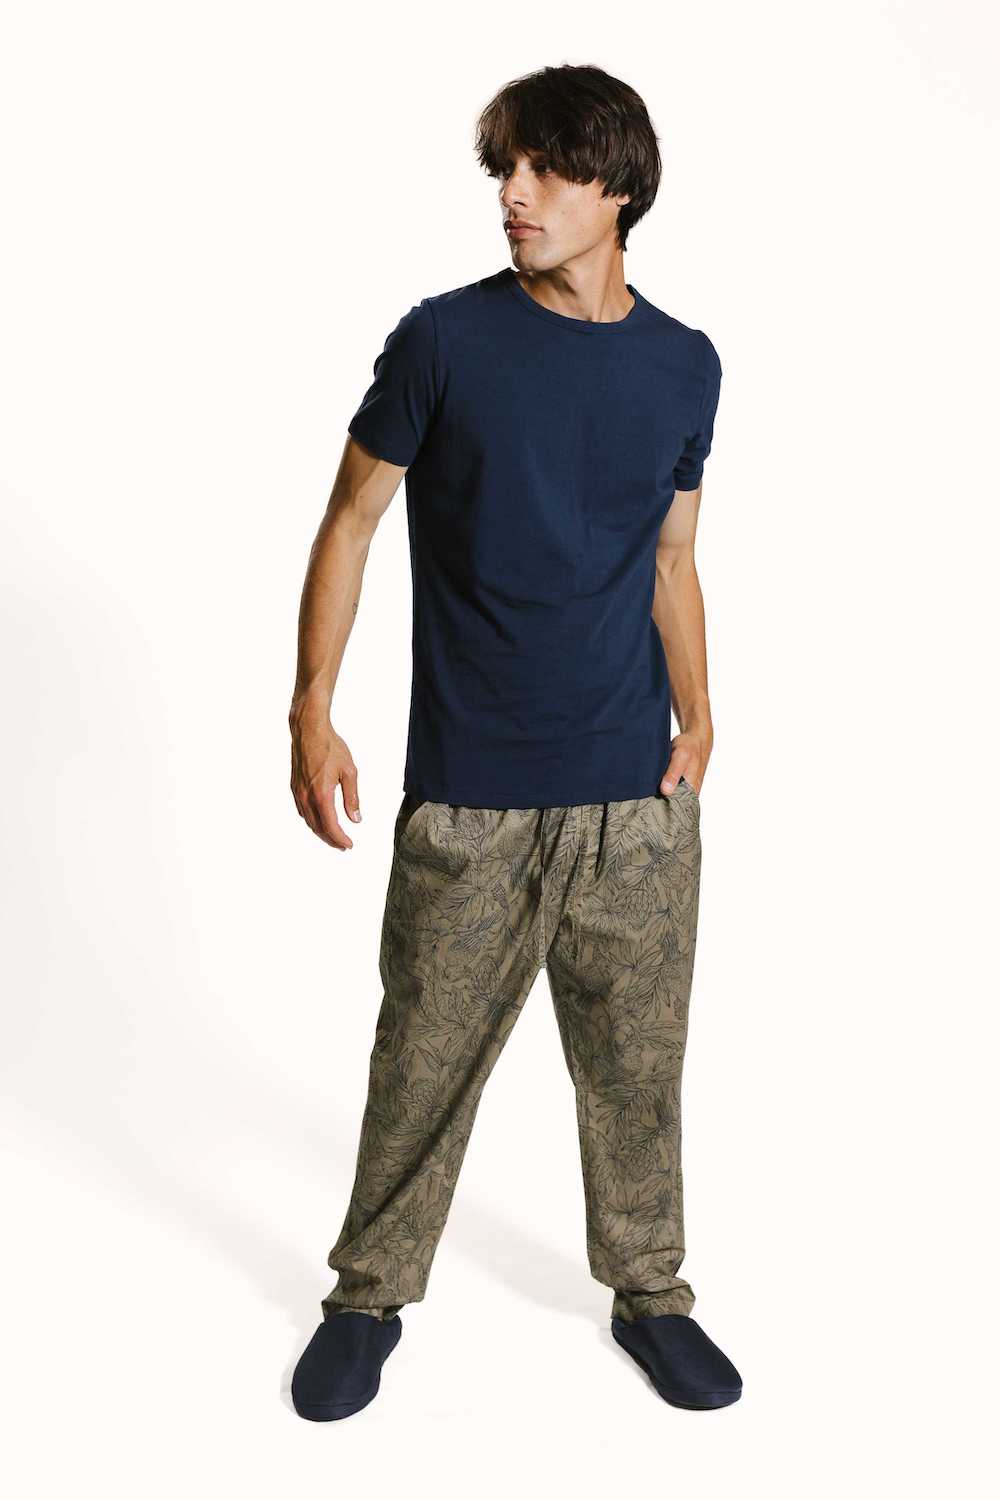 moluccan cockatoo pyjama bottoms on model with navy organic cotton t-shirt